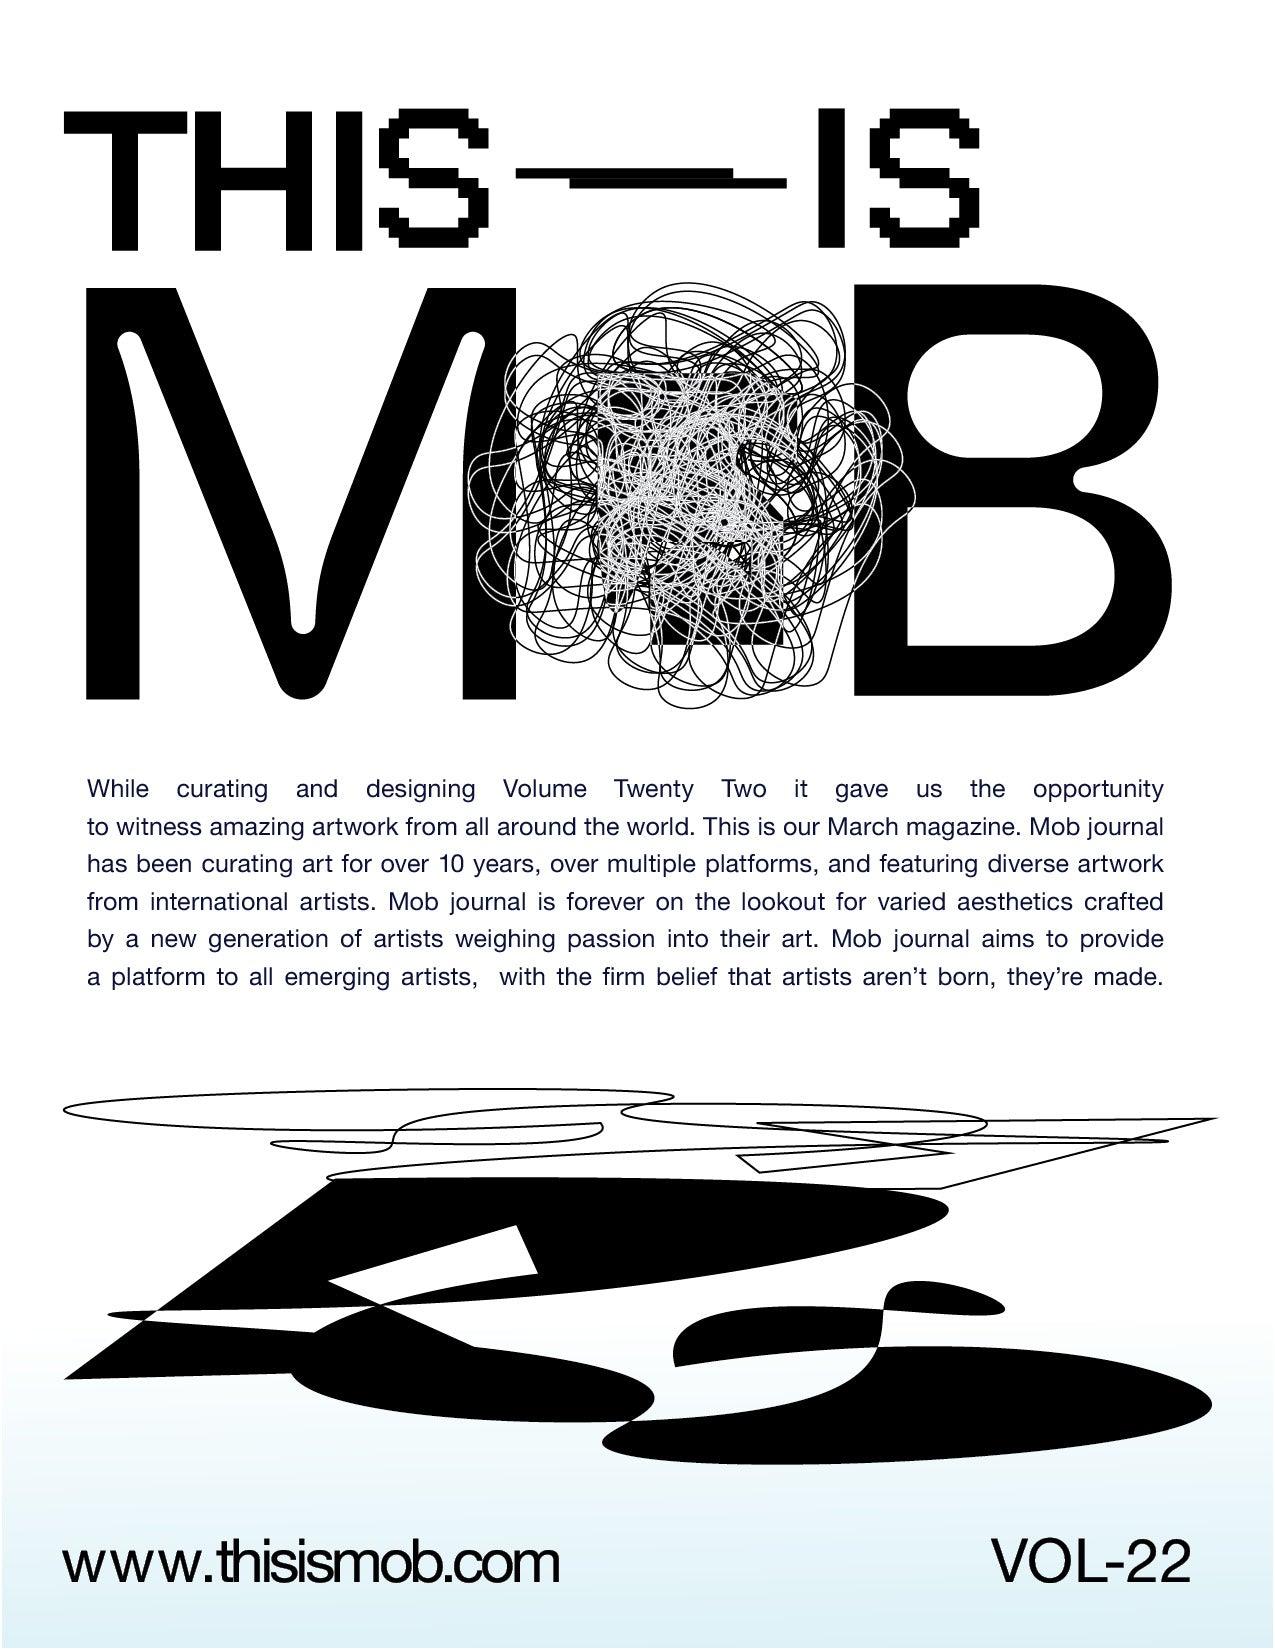 MOB JOURNAL | VOLUME TWENTY TWO | ISSUE #36 - Mob Journal